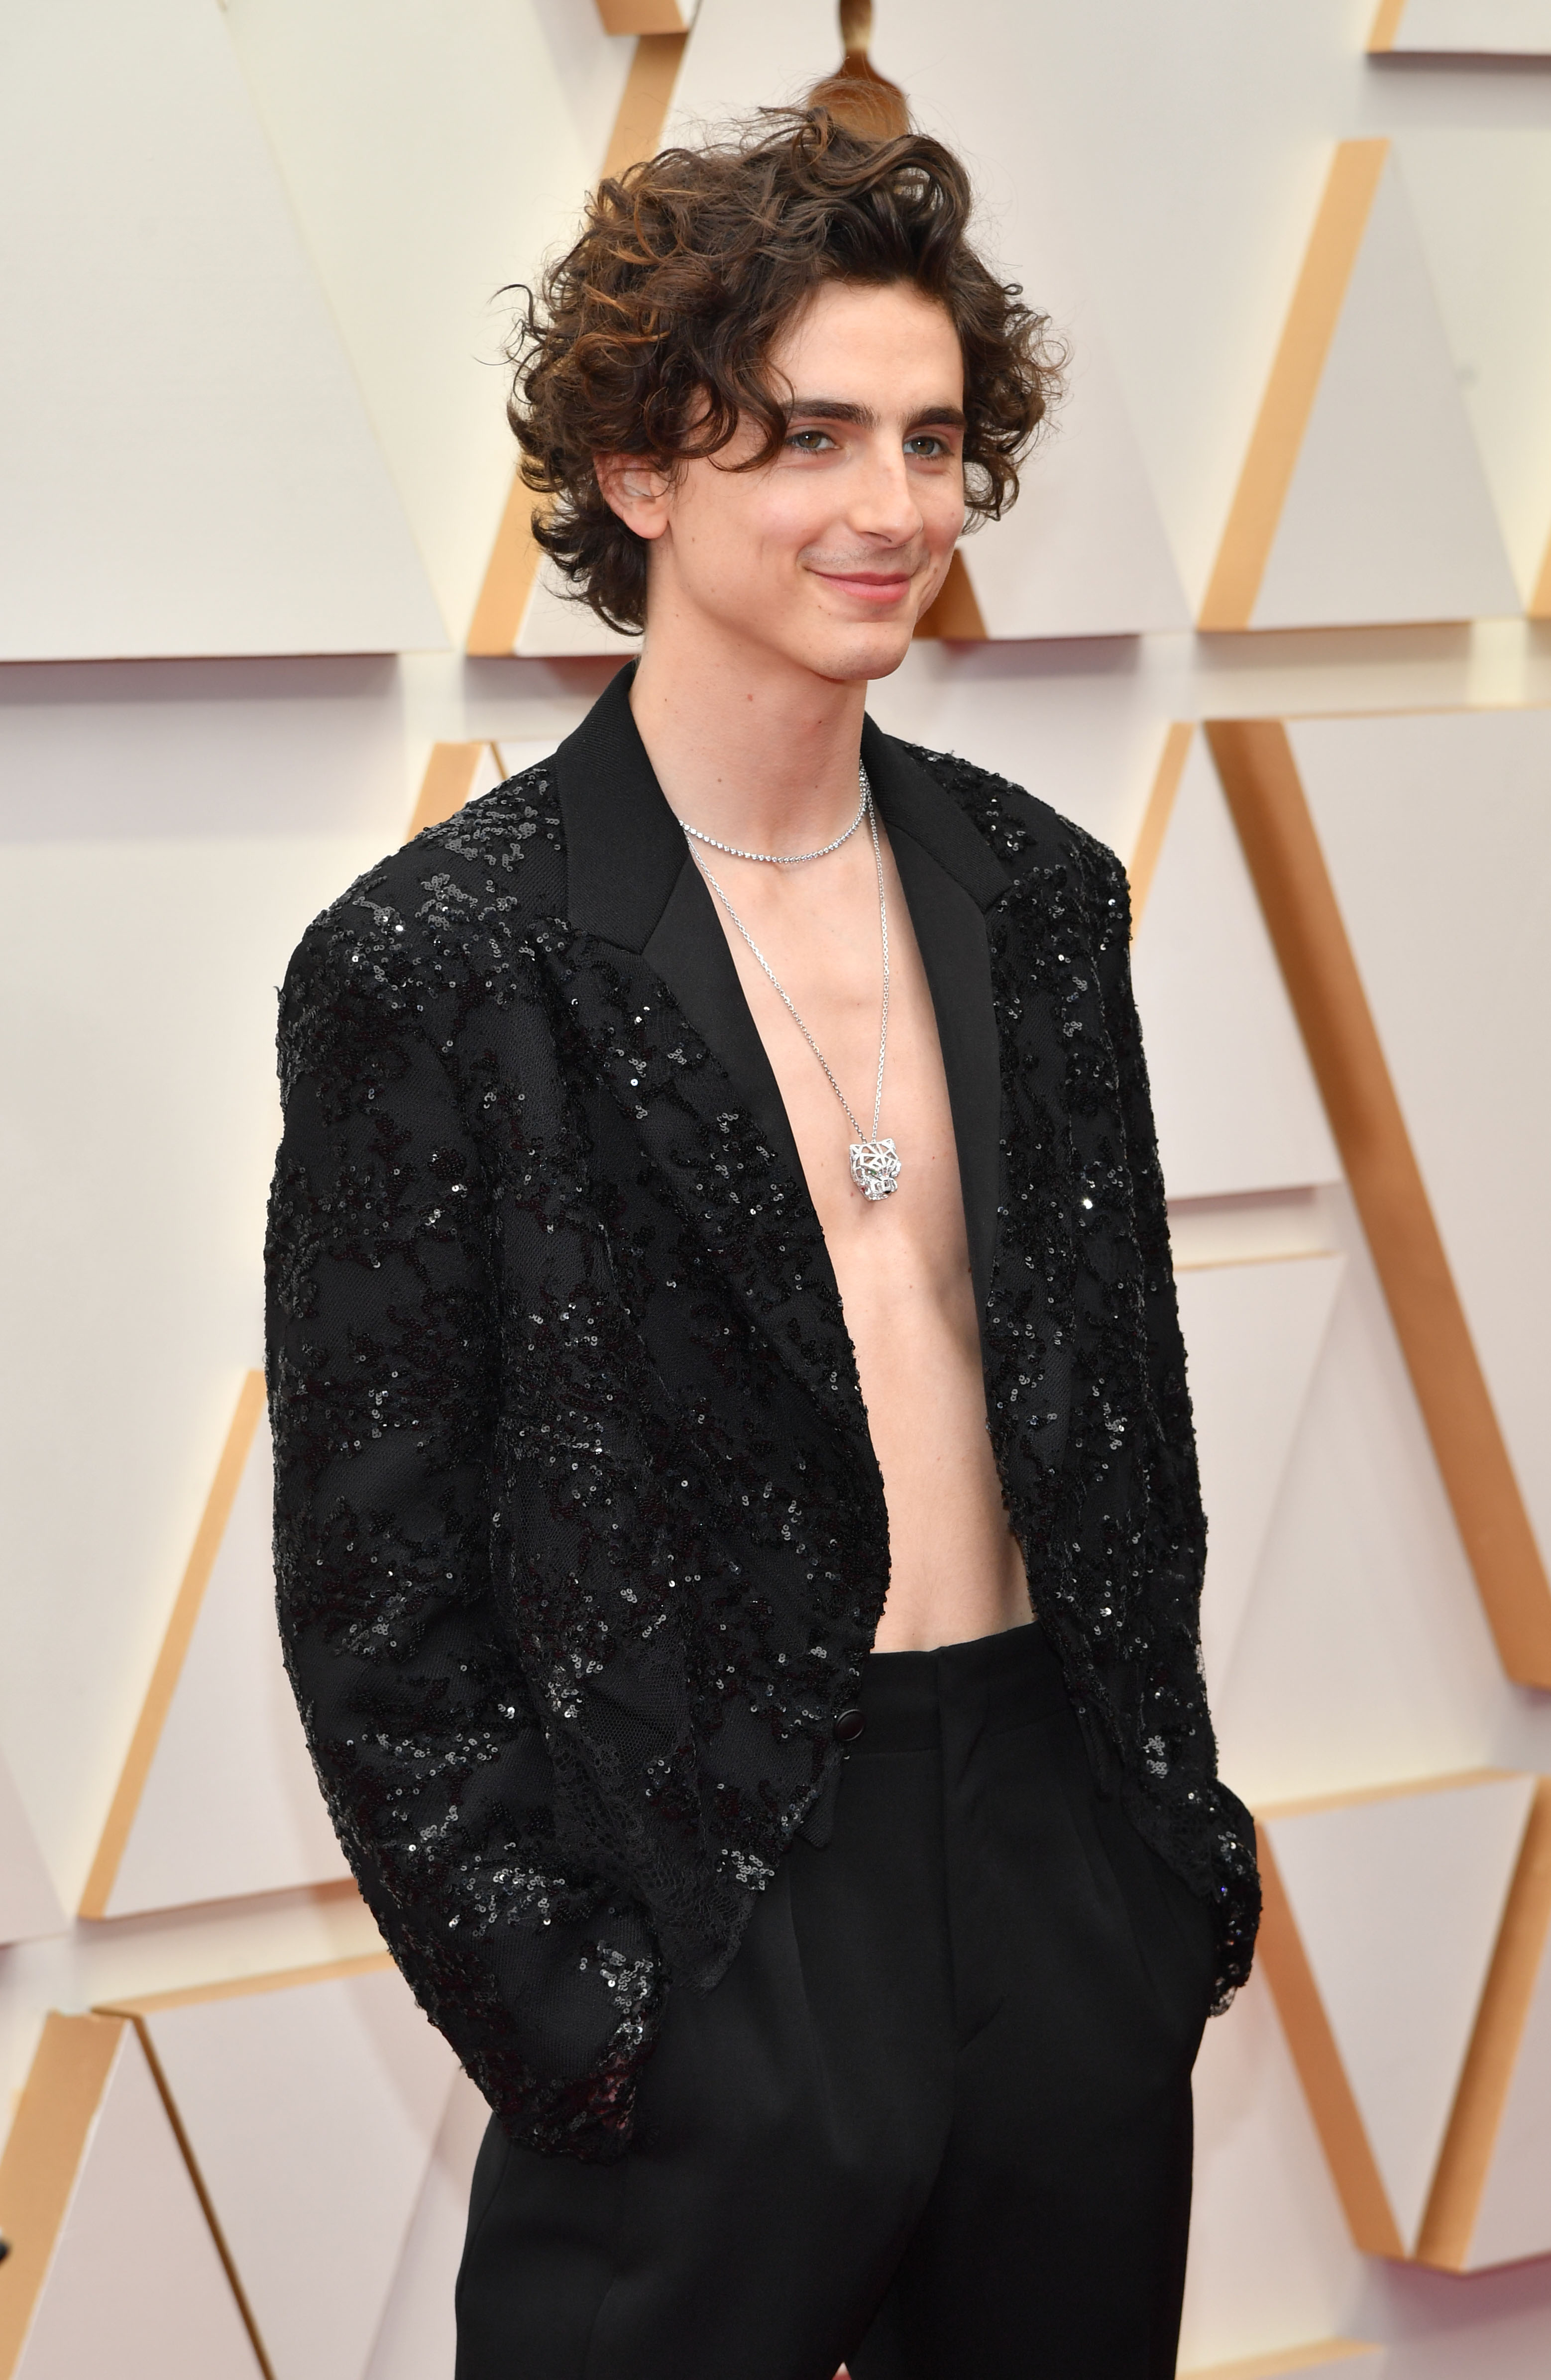 Timothee Chalamet Shirtless on Oscars 2022 Red Carpet Photos